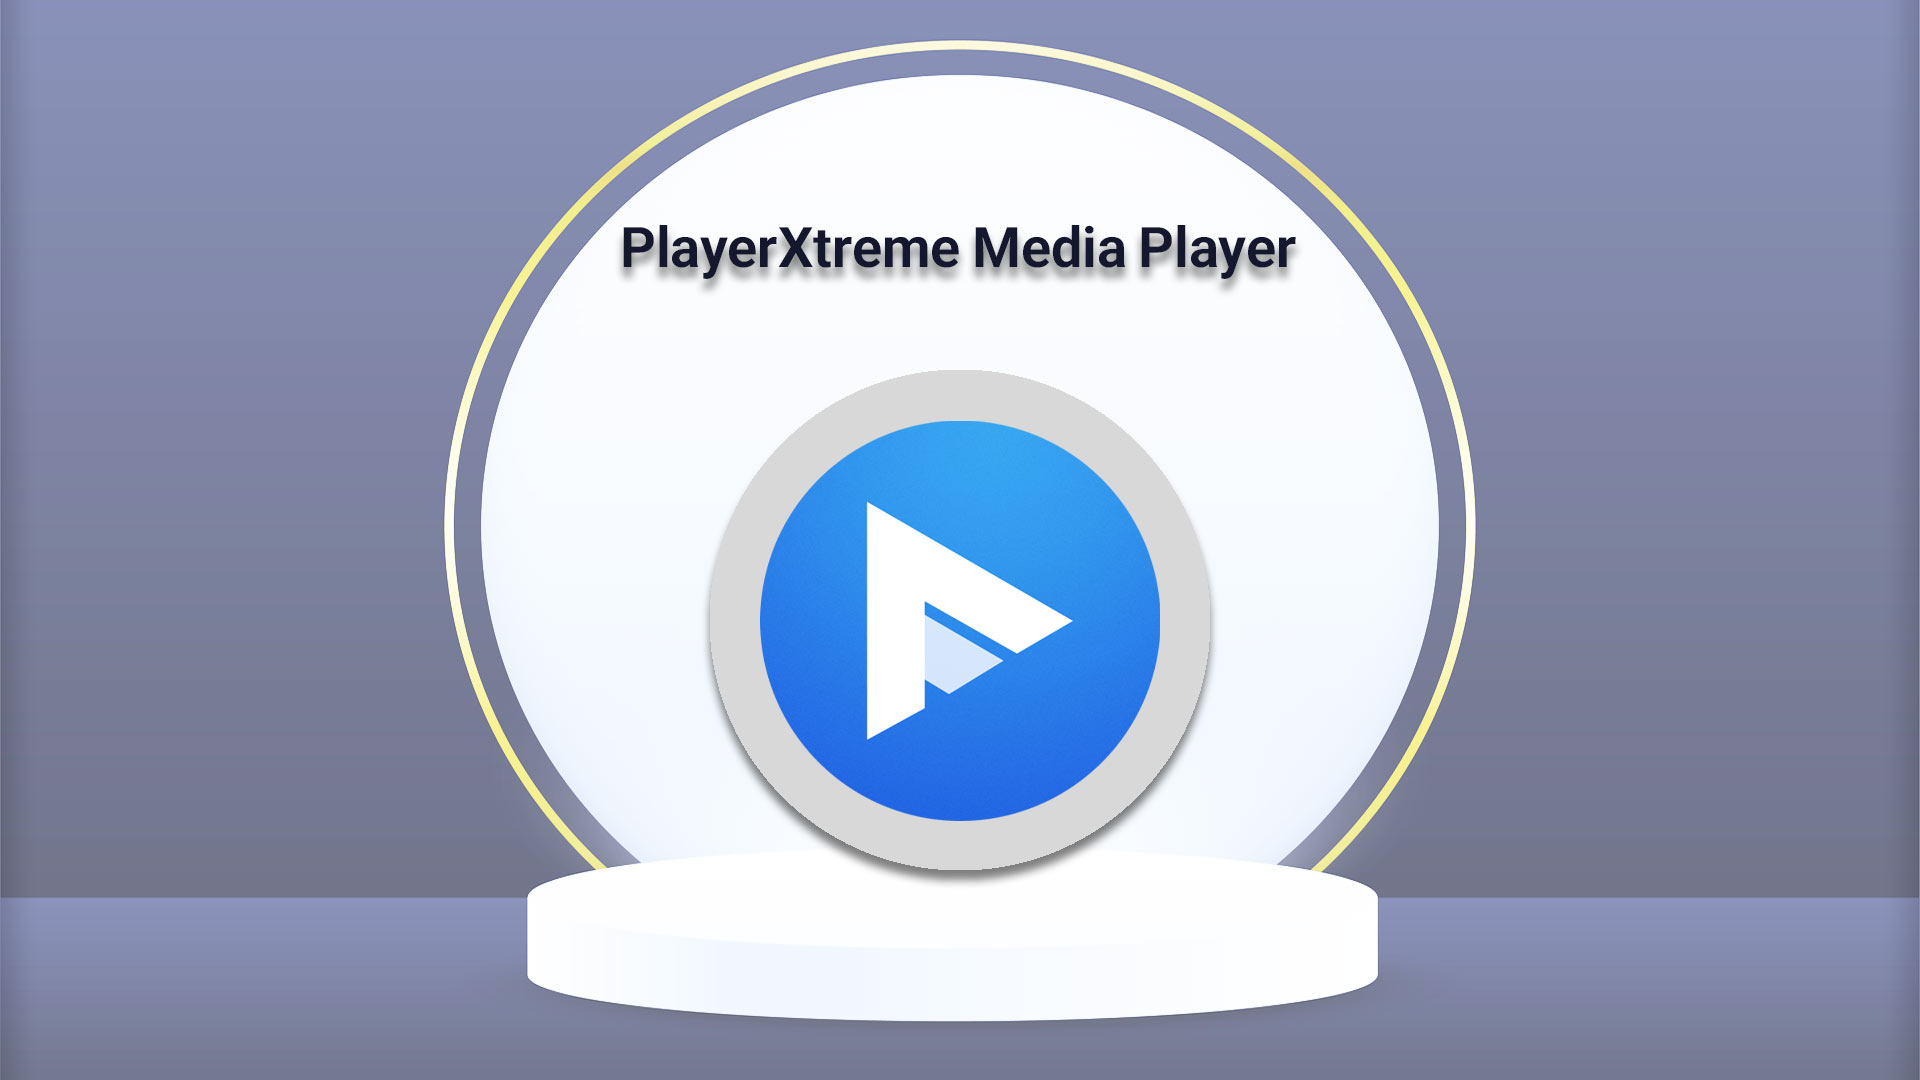 PlayerXtreme